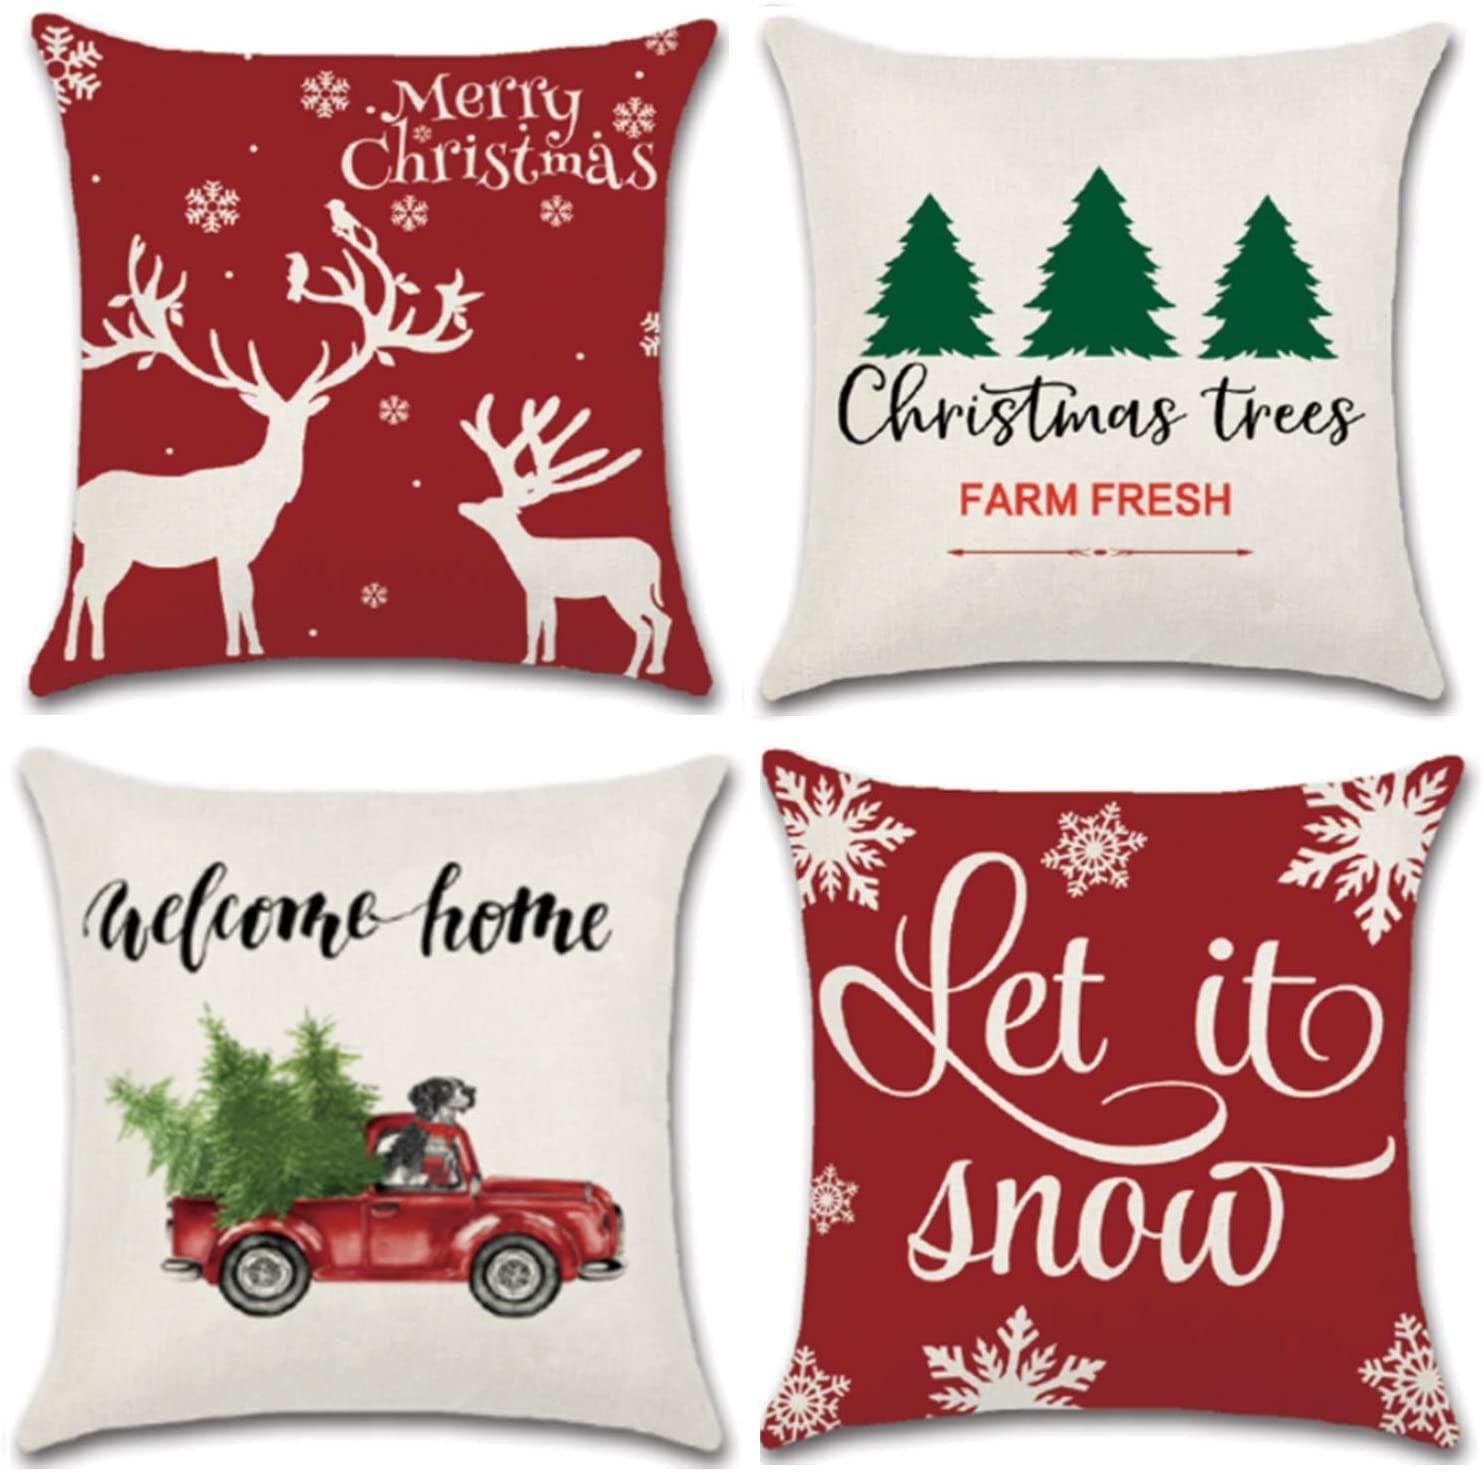 18" Animal Pillow Case Cover Cotton Linen Christmas Home Deer Cushion Decor 